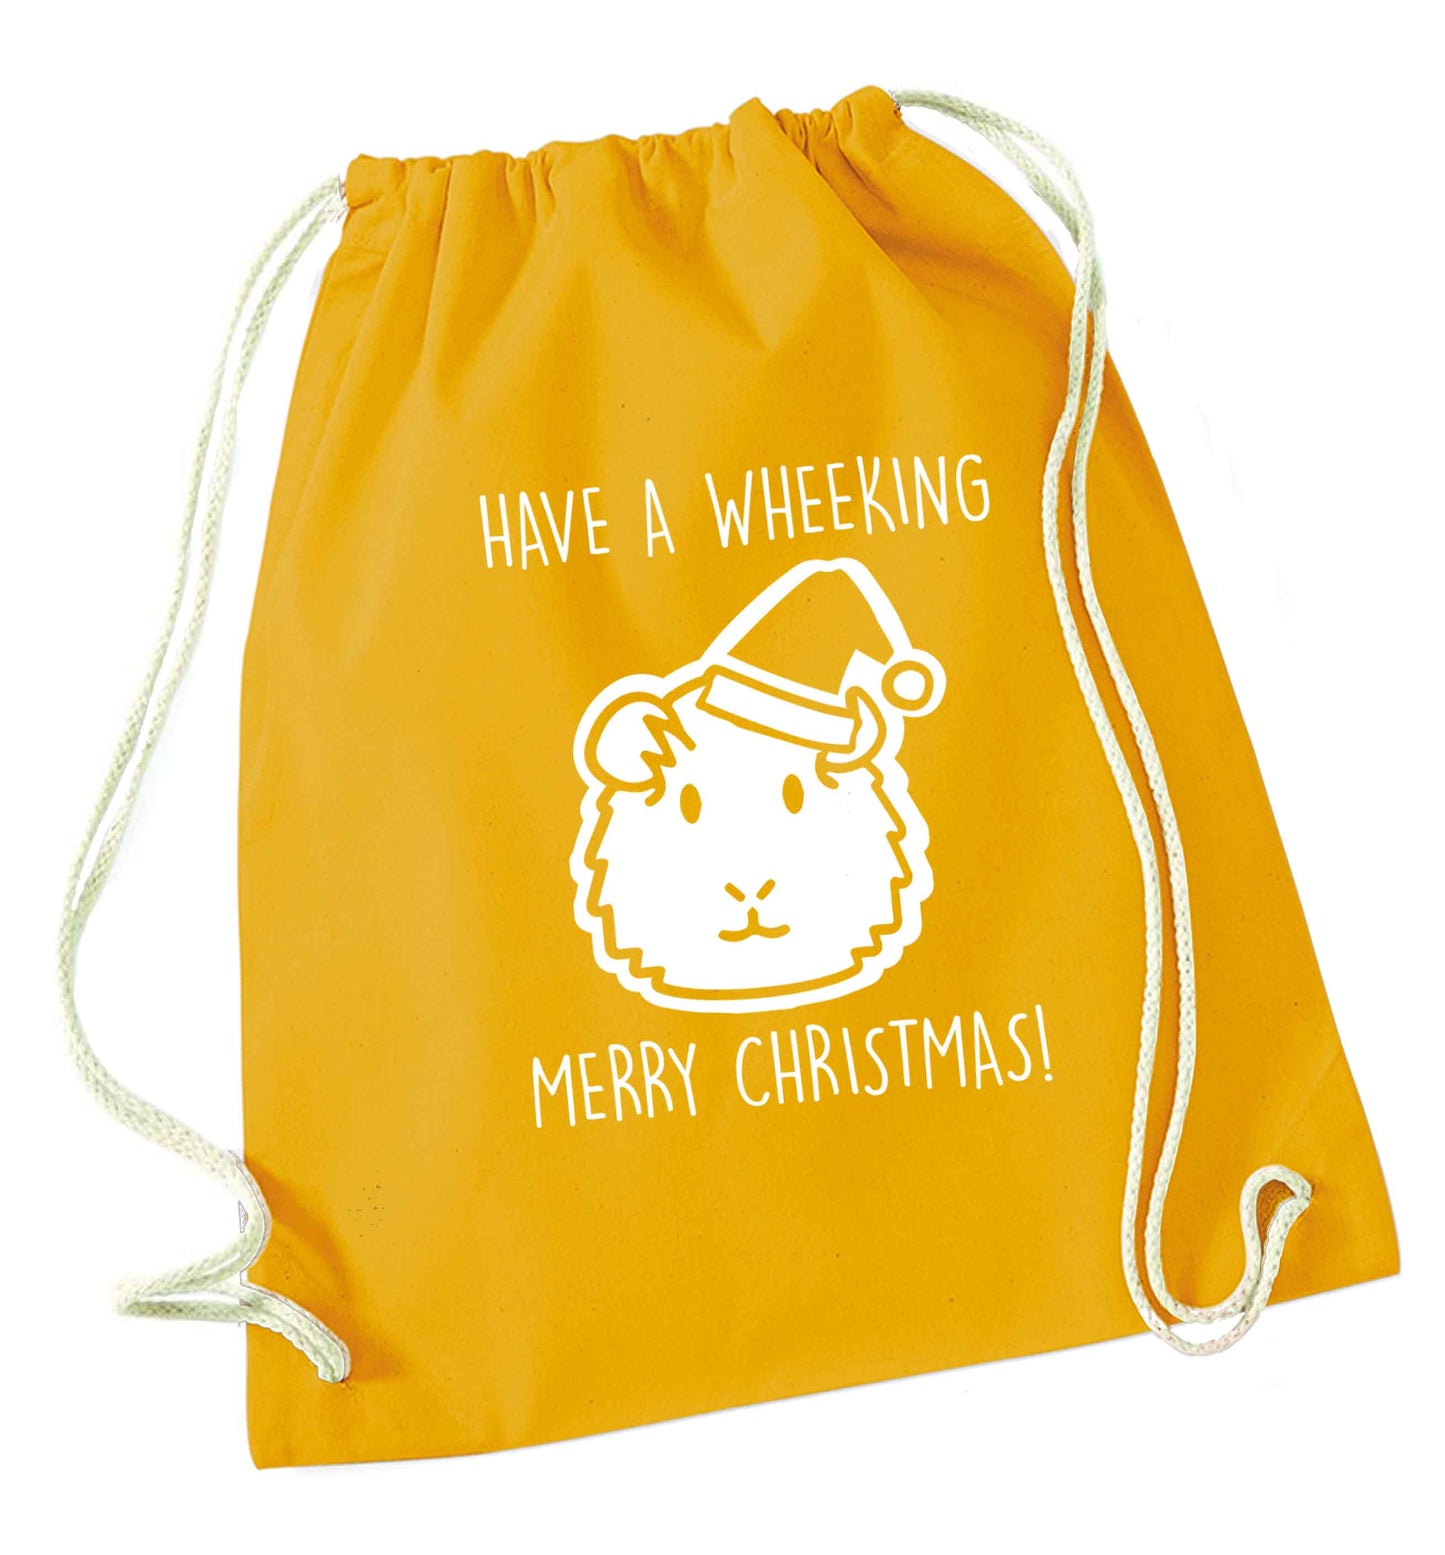 Have a wheeking merry Christmas mustard drawstring bag